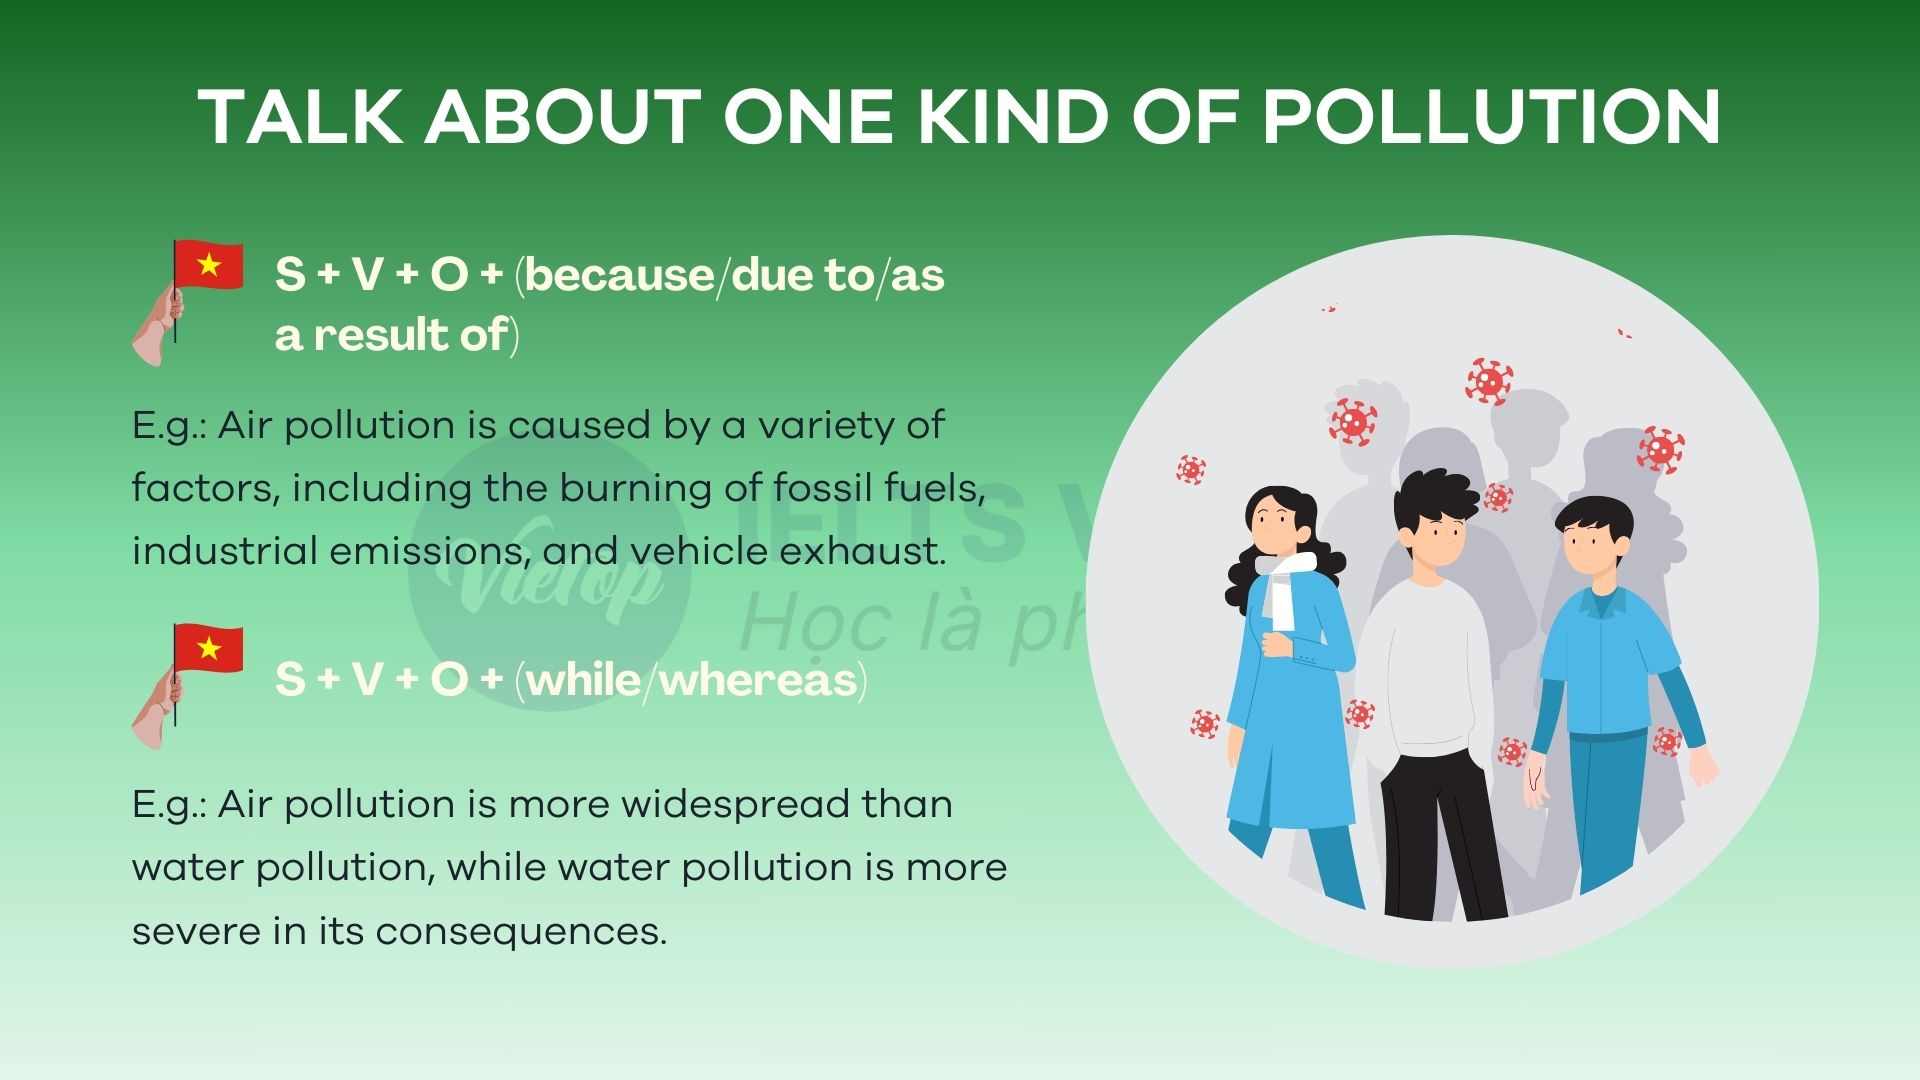 Cấu trúc cho chủ đề talk about one kind of pollution